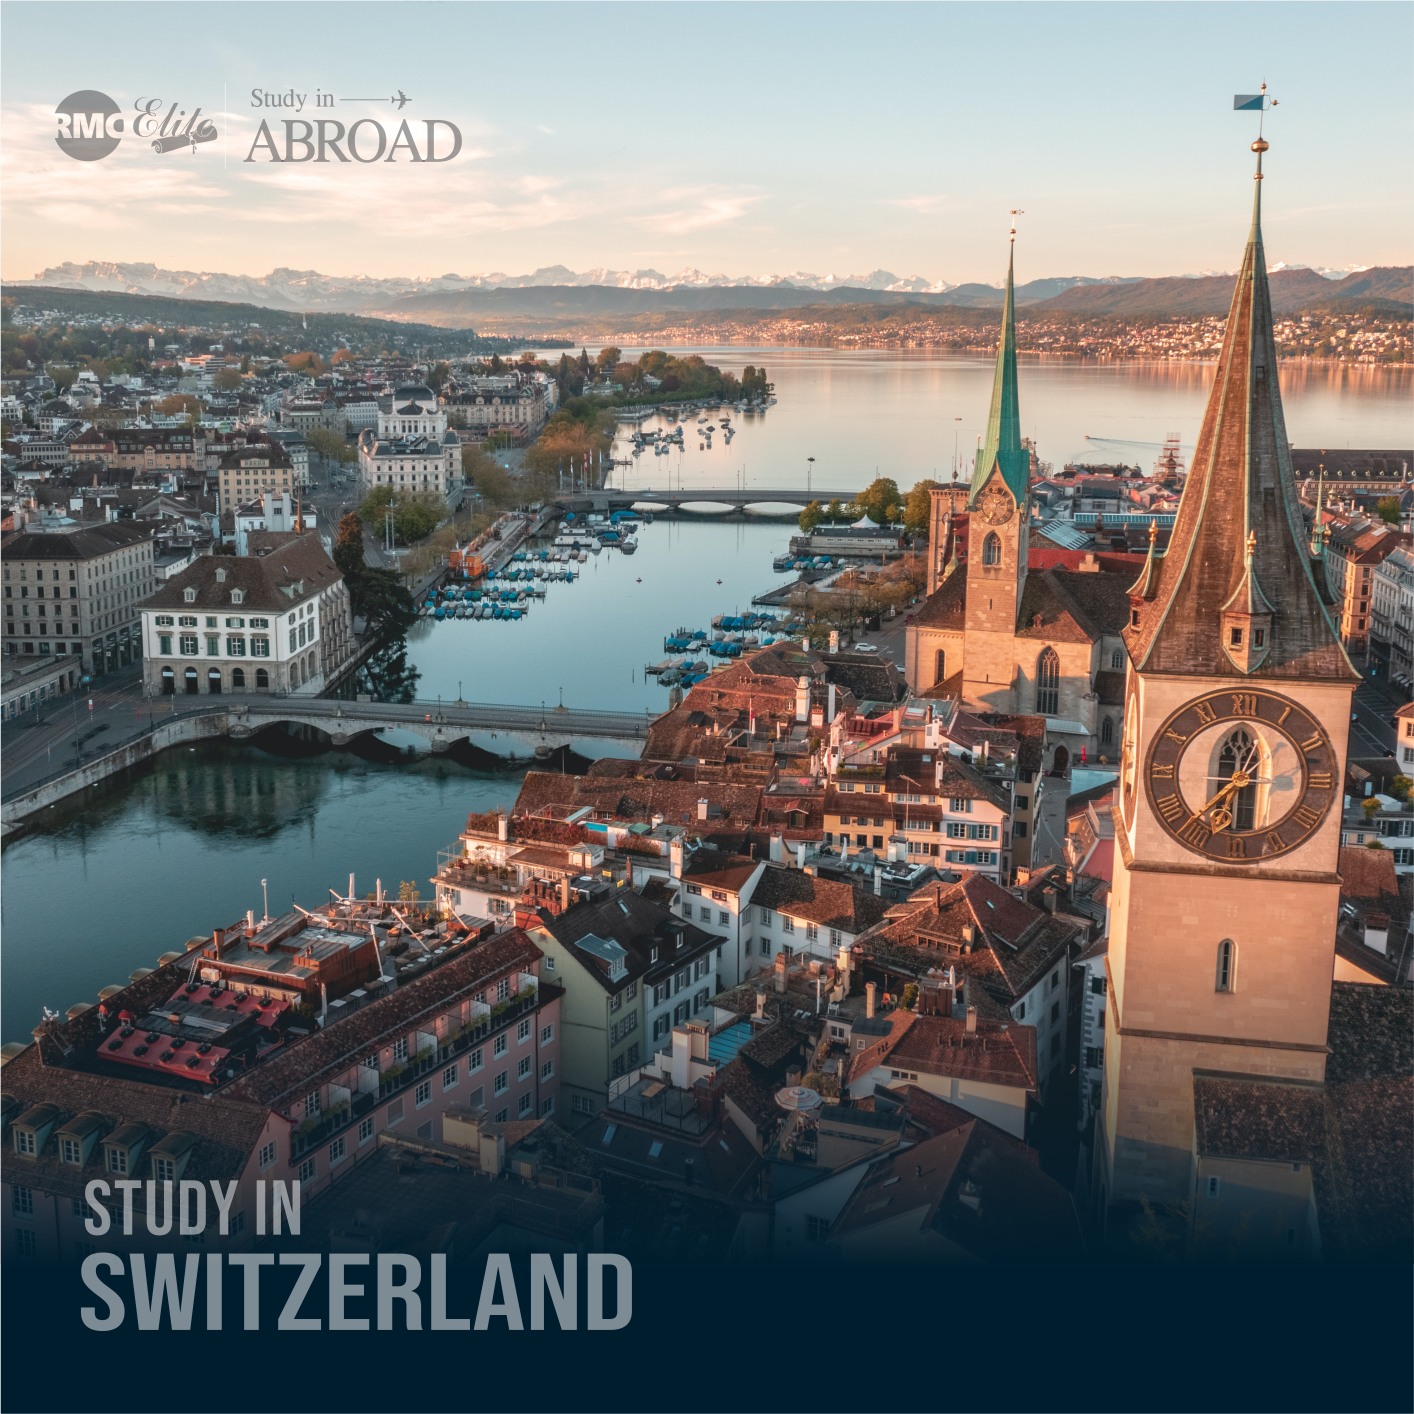 Study In Switzerland